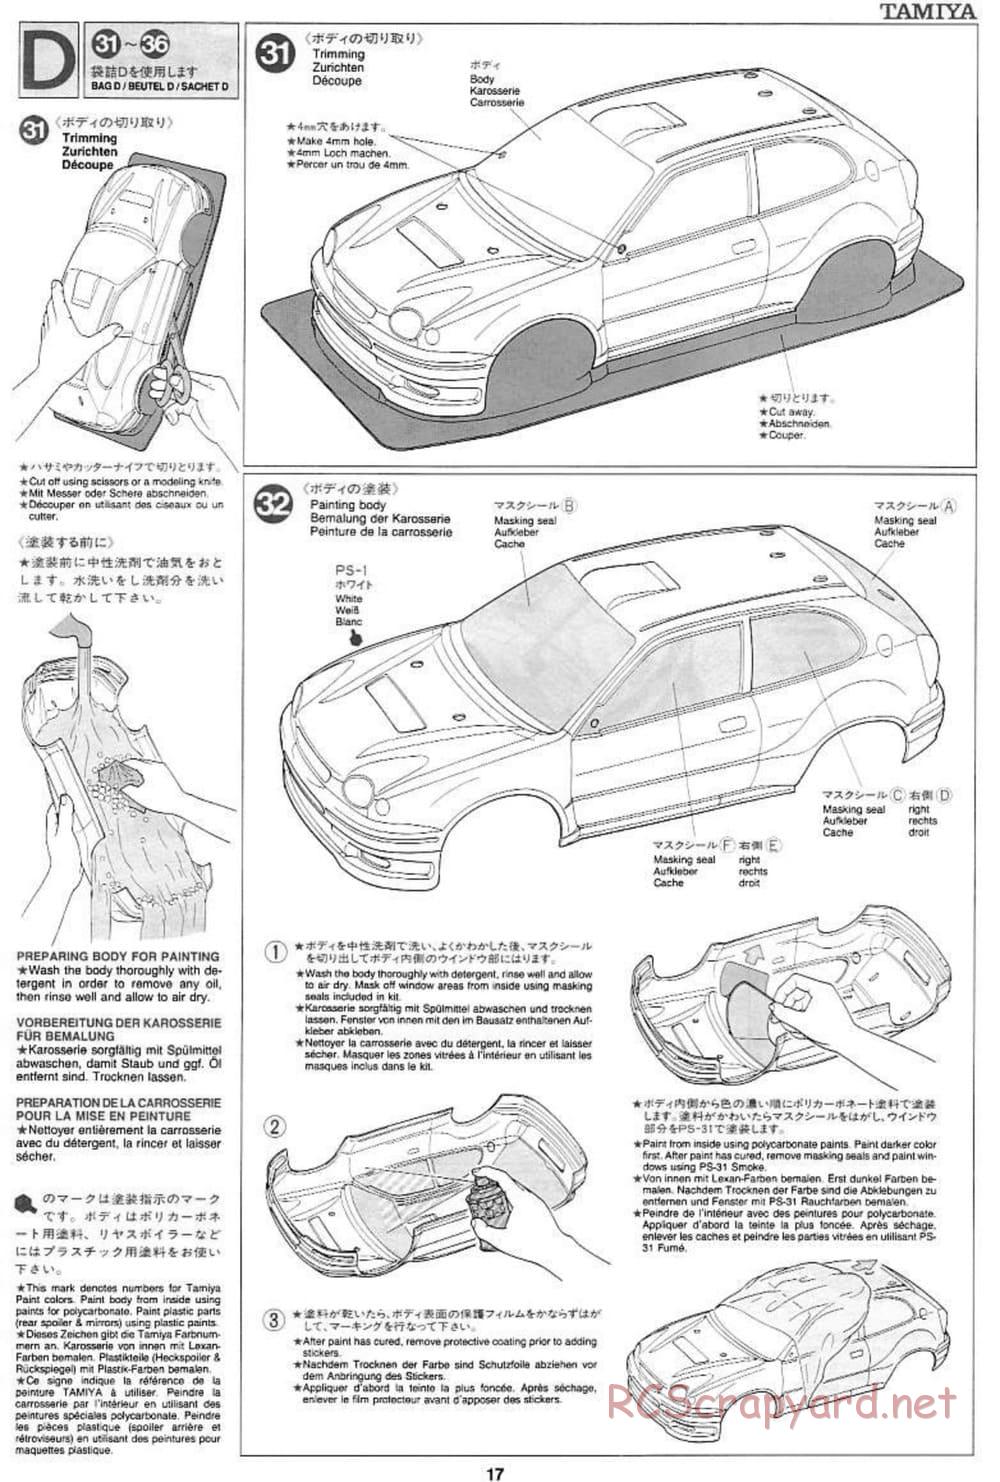 Tamiya - Toyota Corolla WRC - TA-03FS Chassis - Manual - Page 17